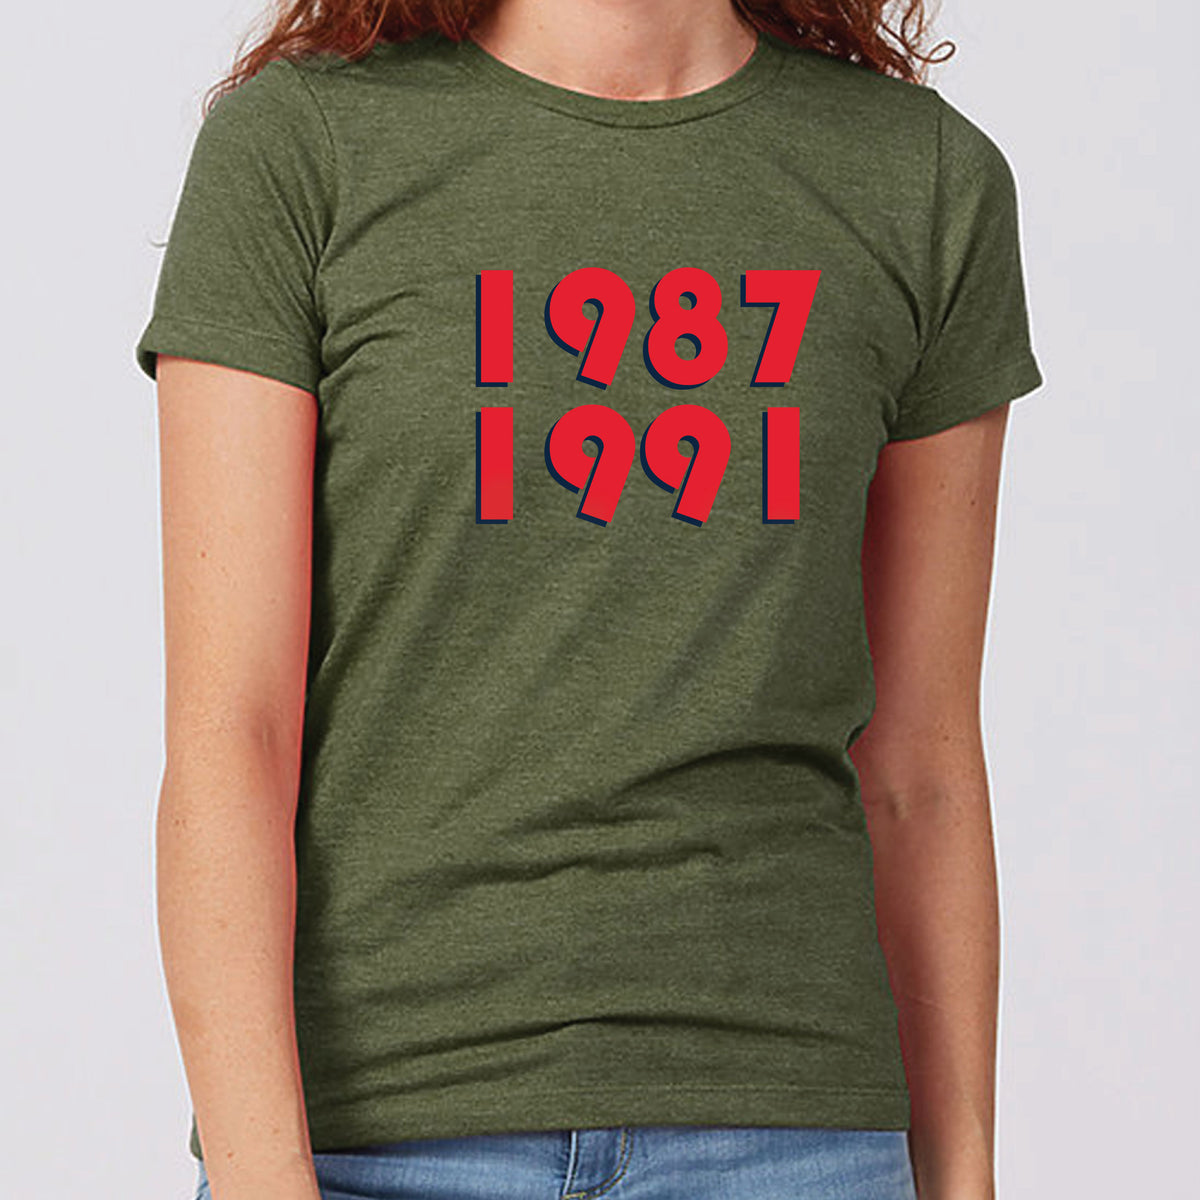 1987 1991 Minnesota Women's Slim Fit T-Shirt – Minnesota Awesome